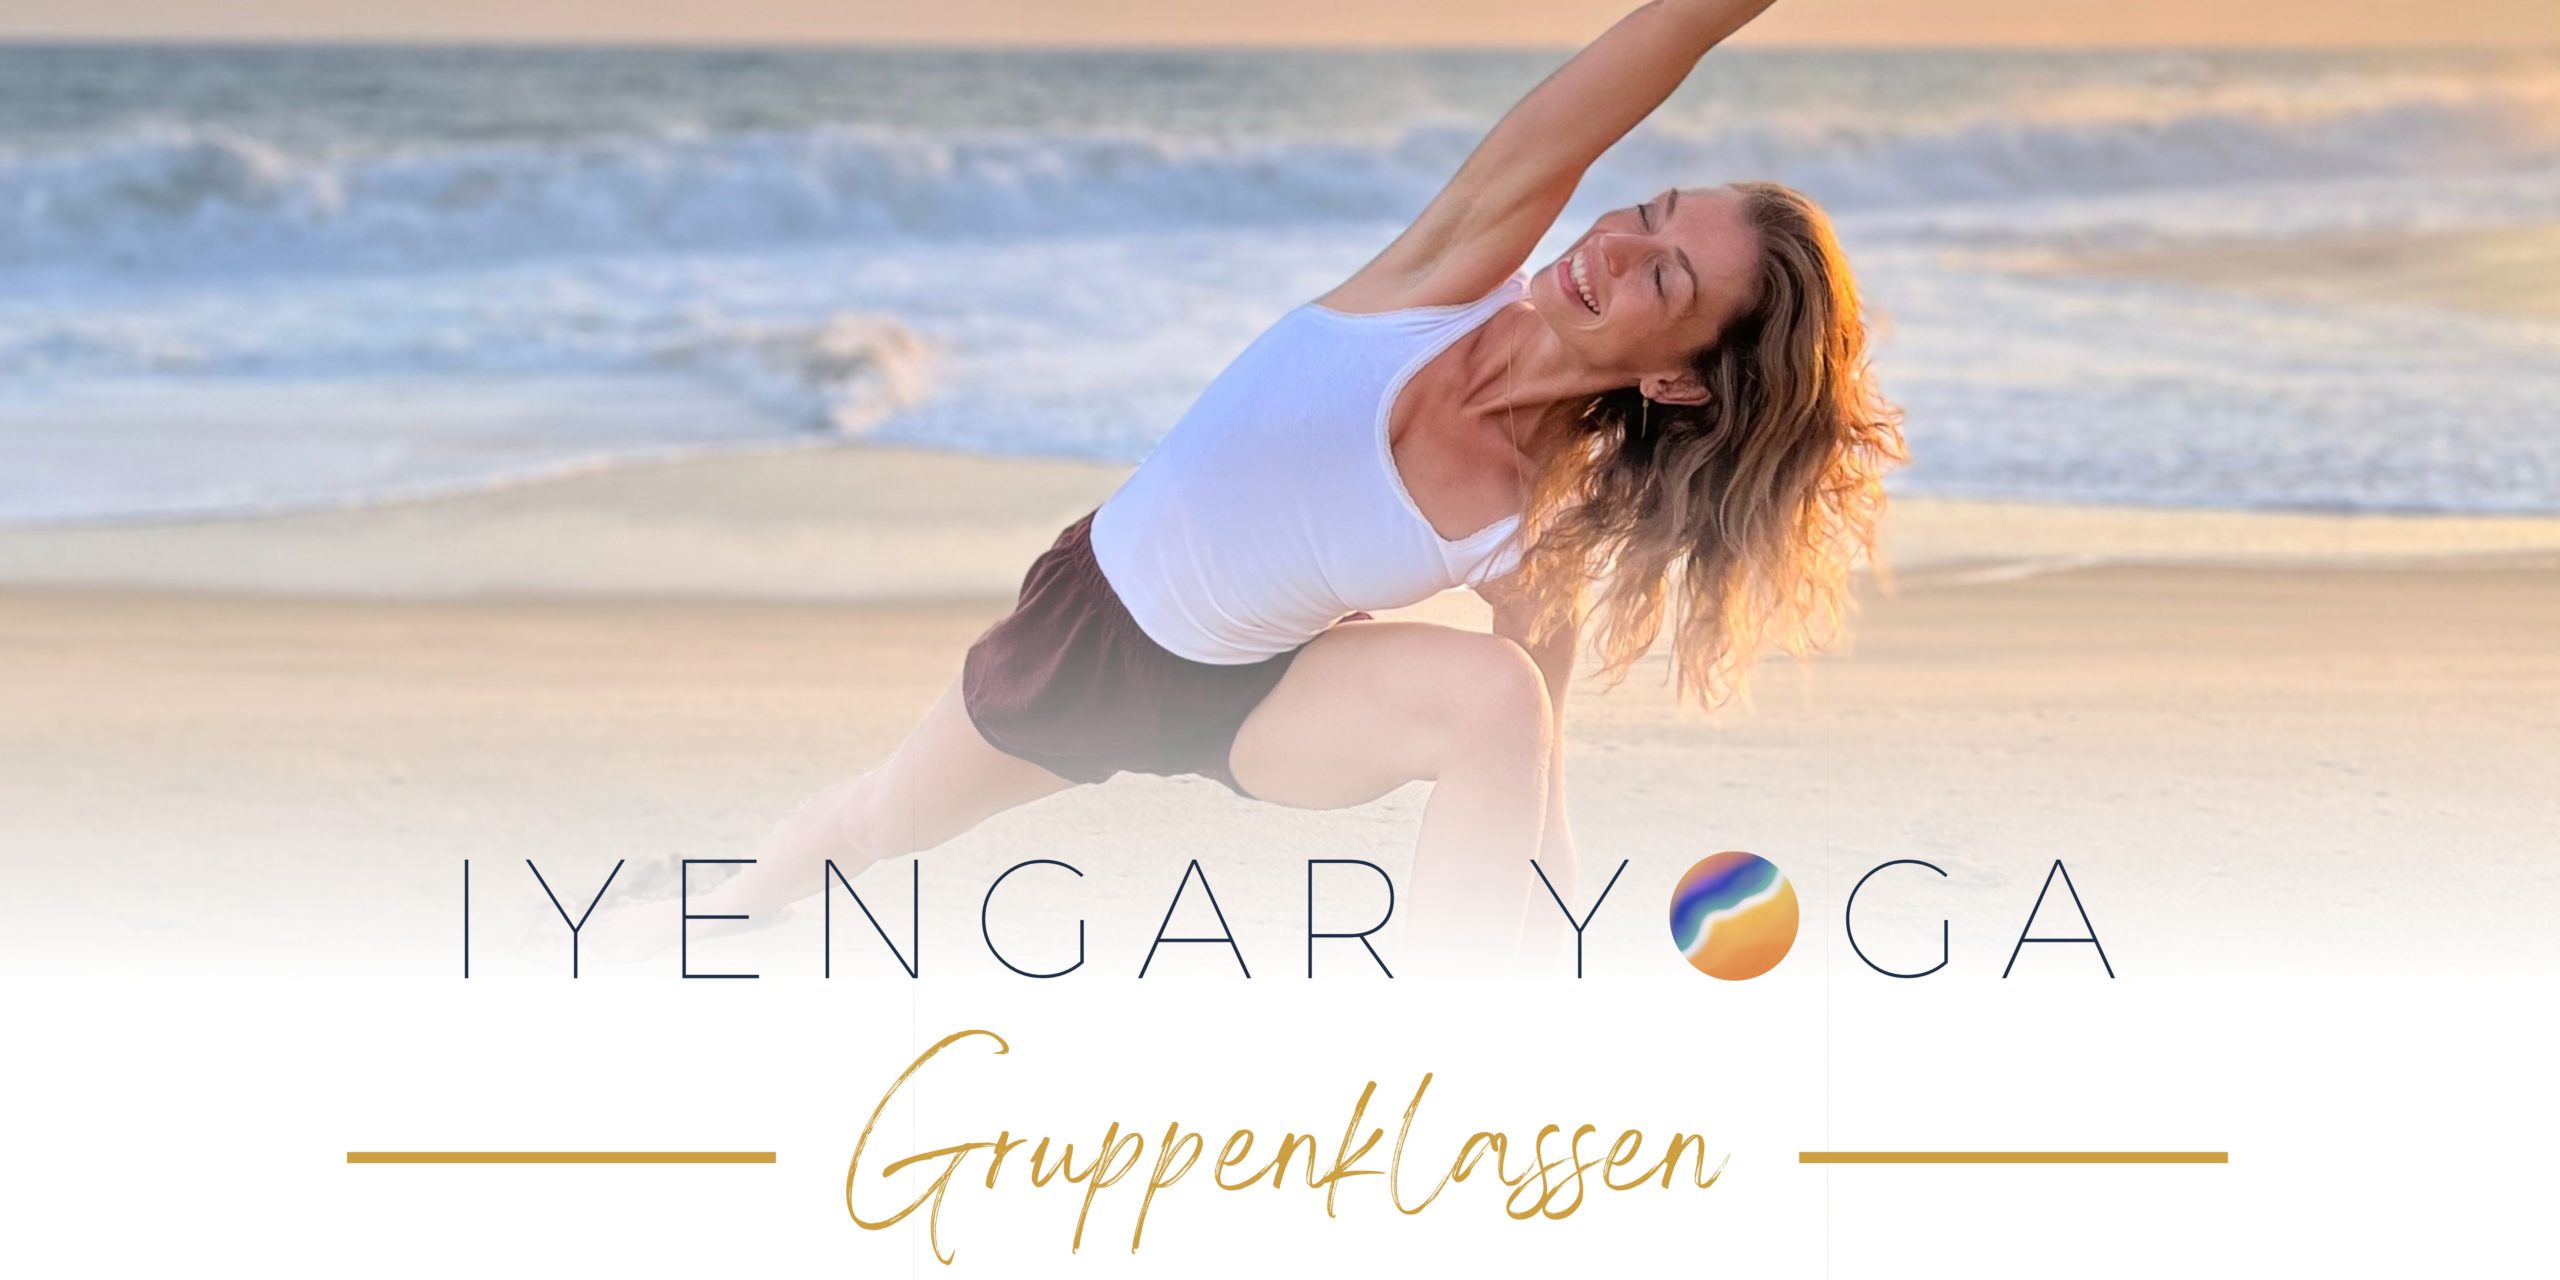 Iyengar Yoga Gruppenklassen